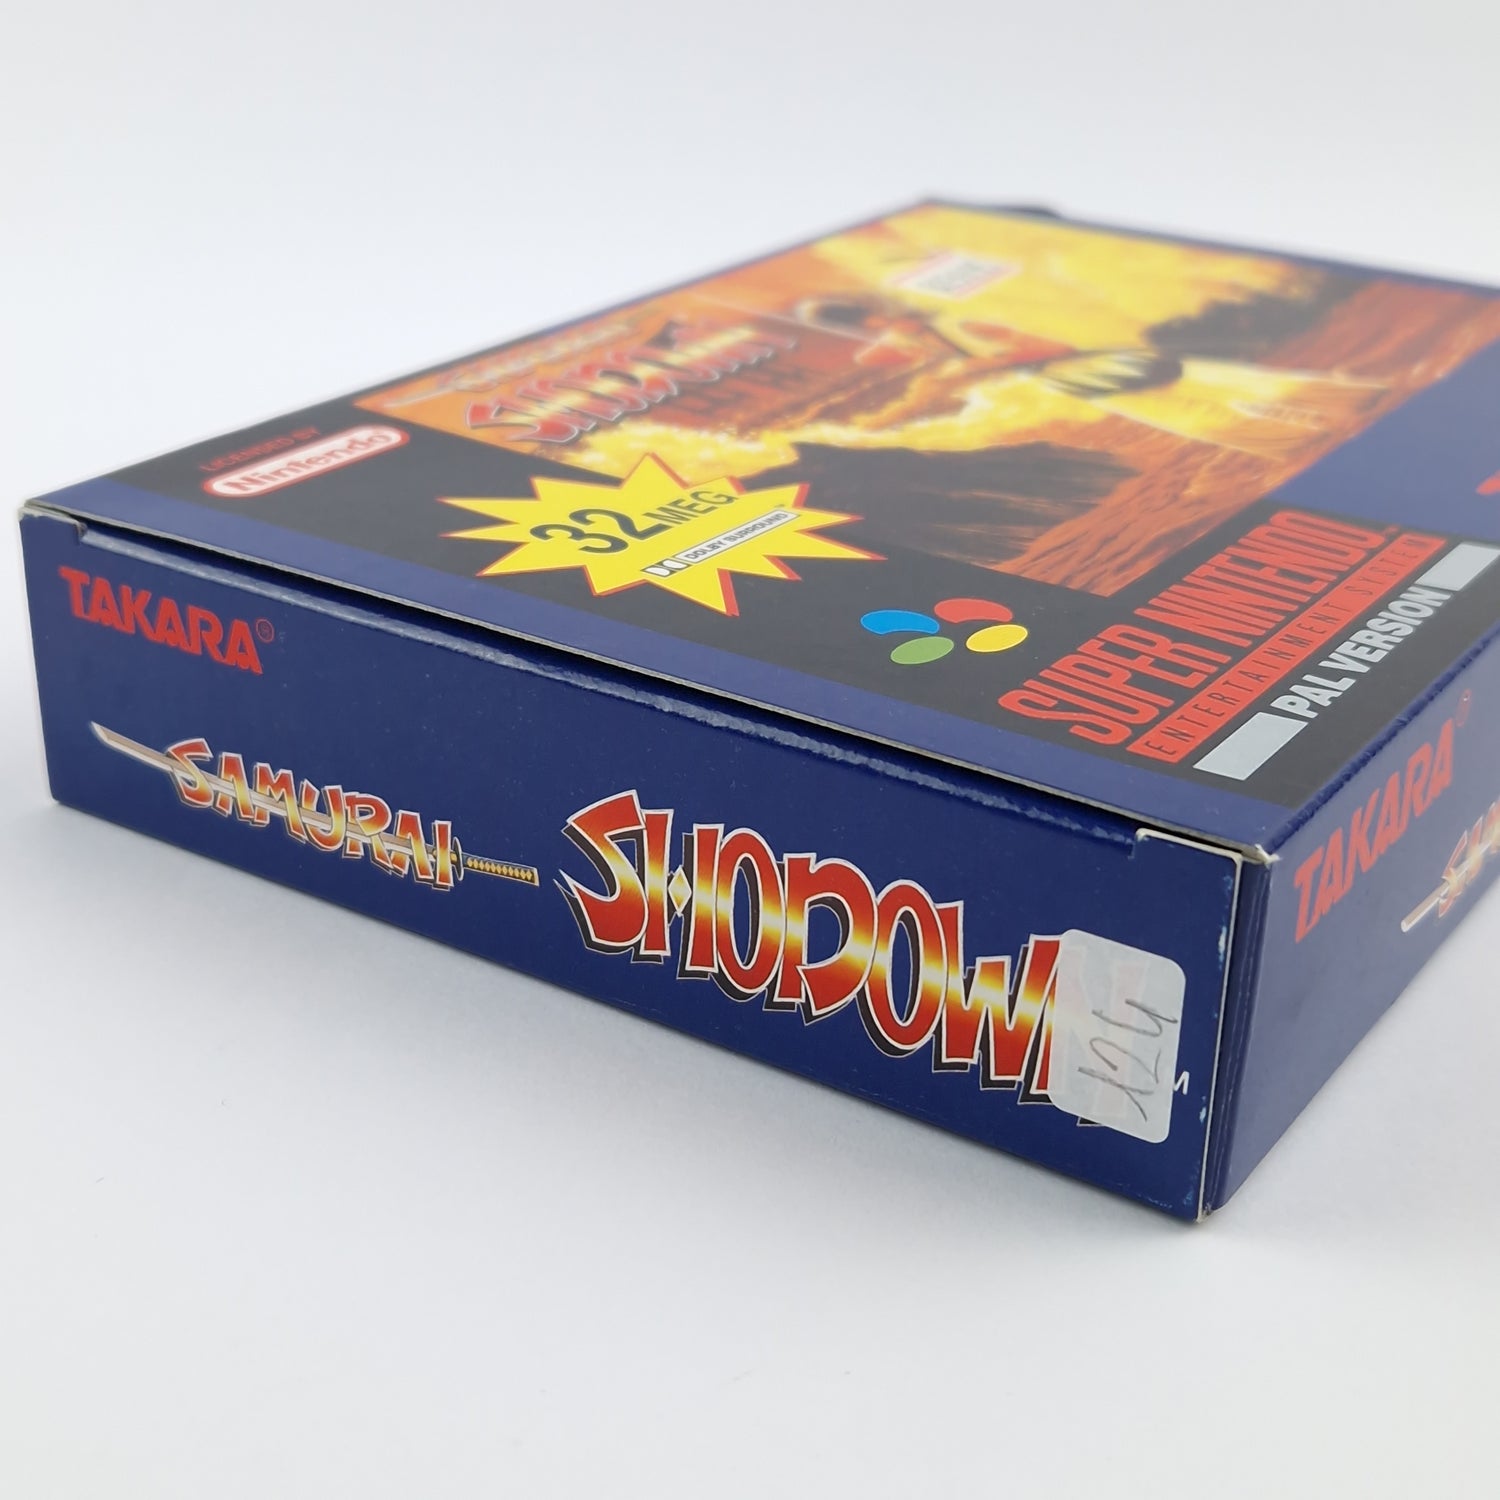 Super Nintendo Game: Samurai Shodown - Module Instructions OVP cib Box / SNES PAL